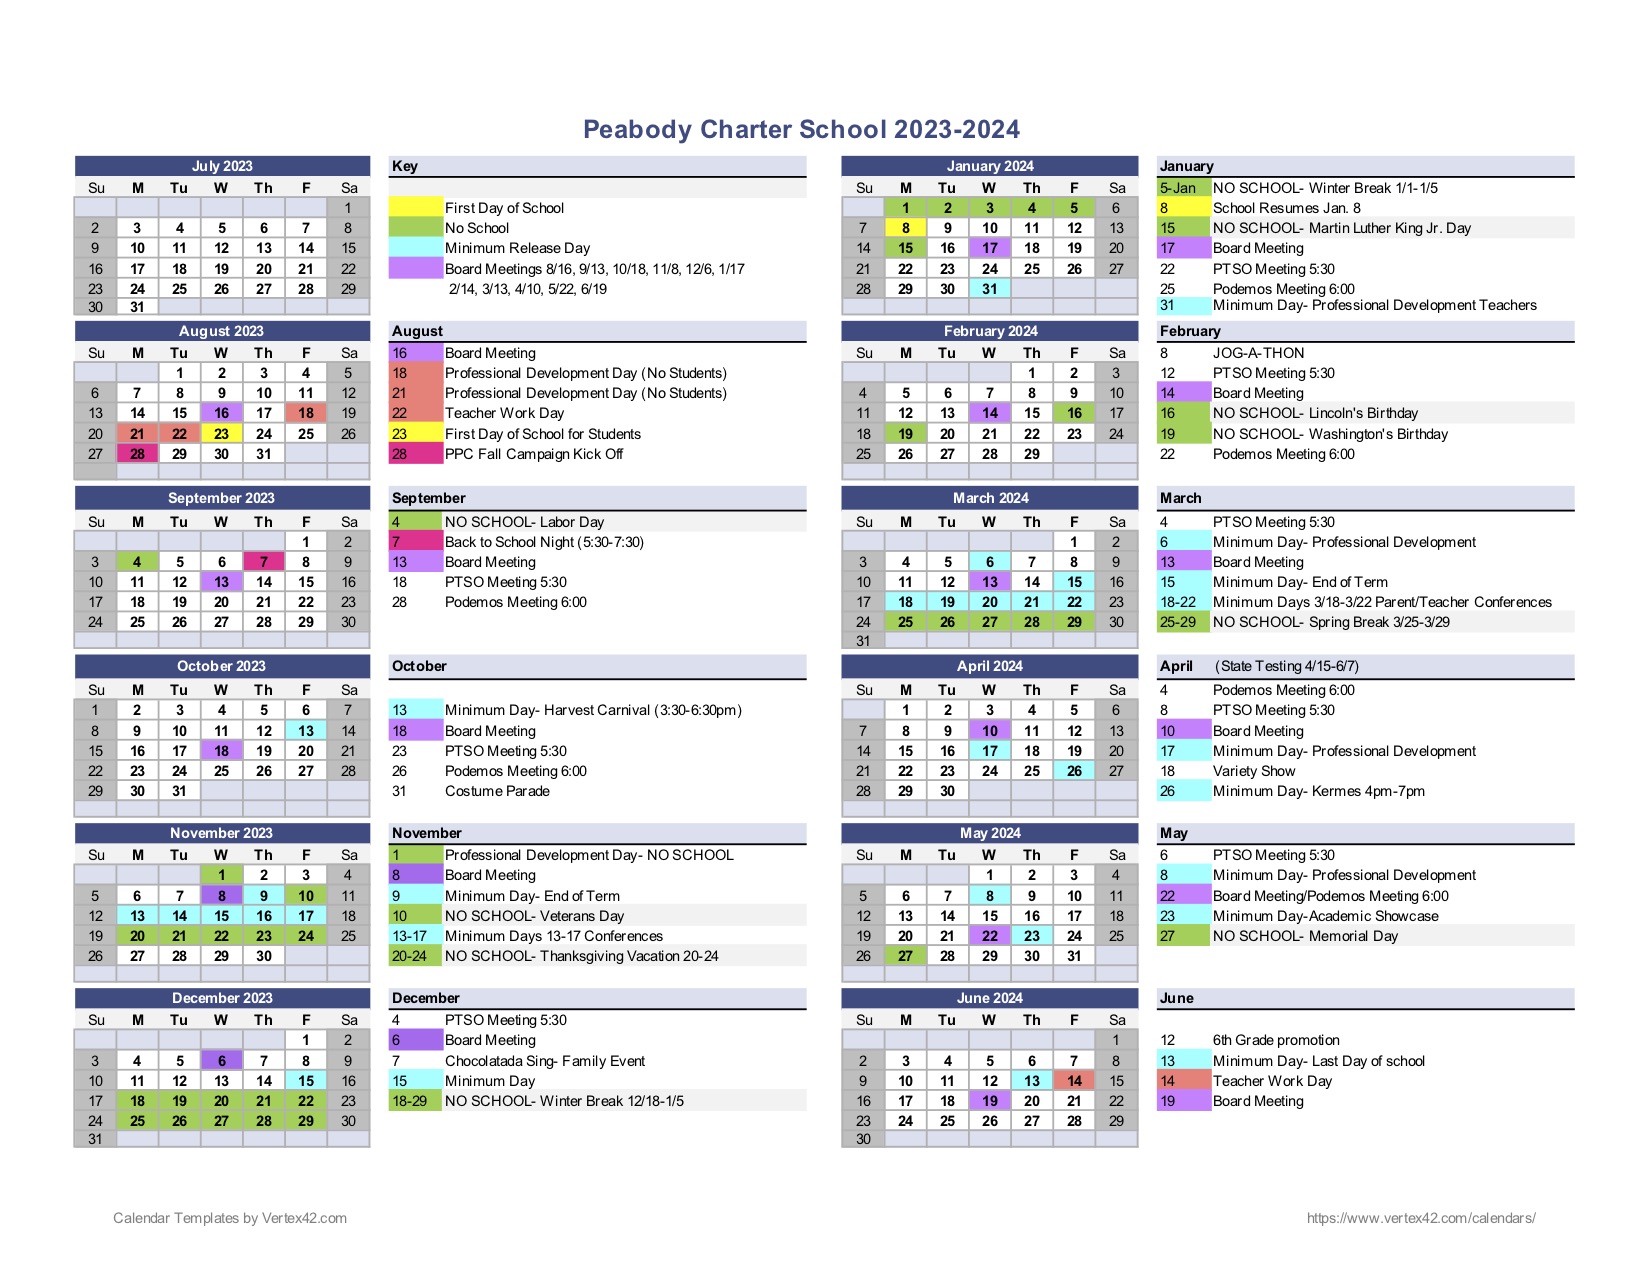 Peabody 2023-2024 Calendar